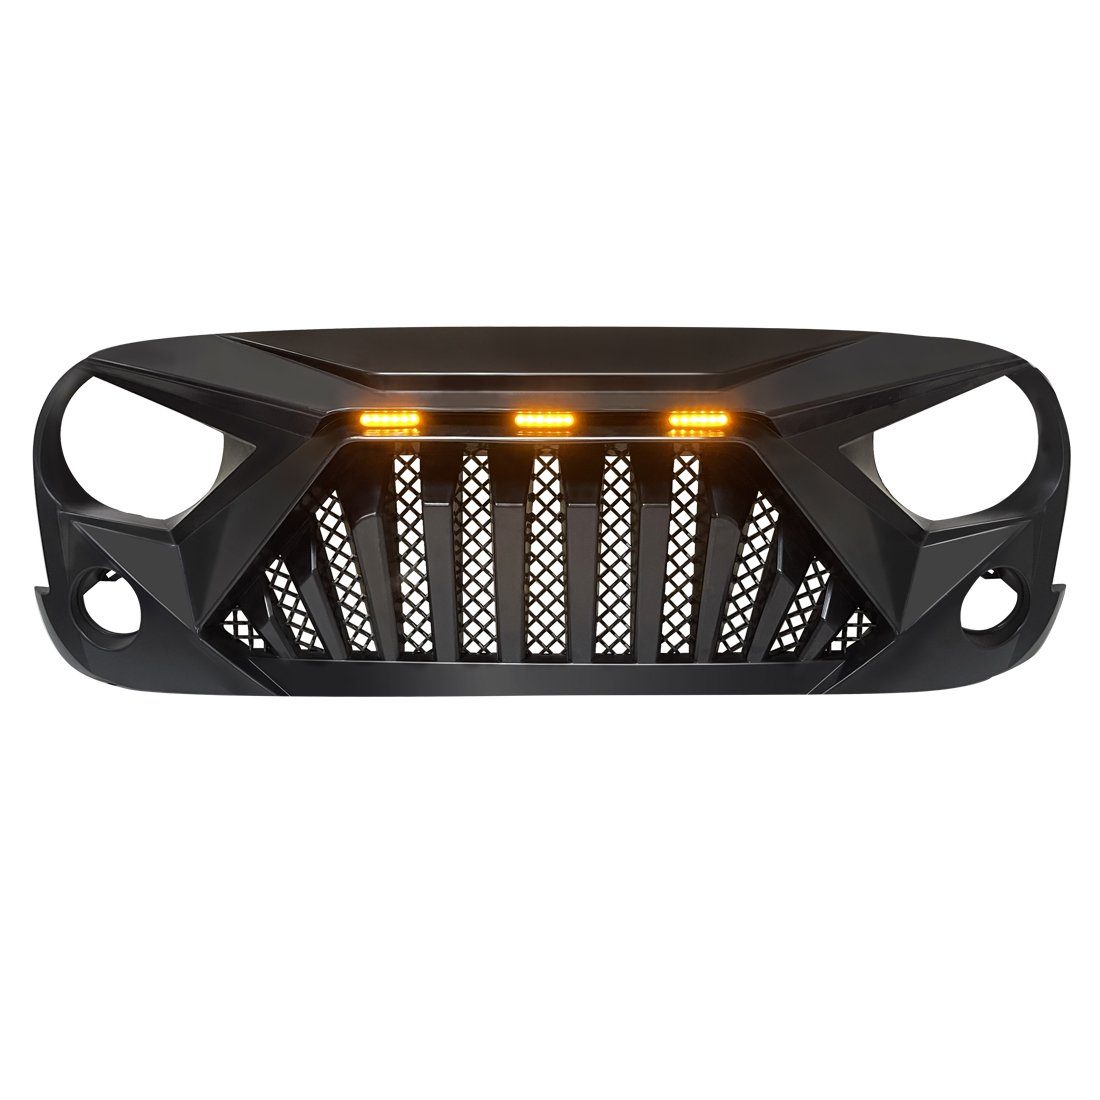 Goliath Grille w/ Amber LED Running Lights for 07-18 Jeep Wrangler JK - Matte Black